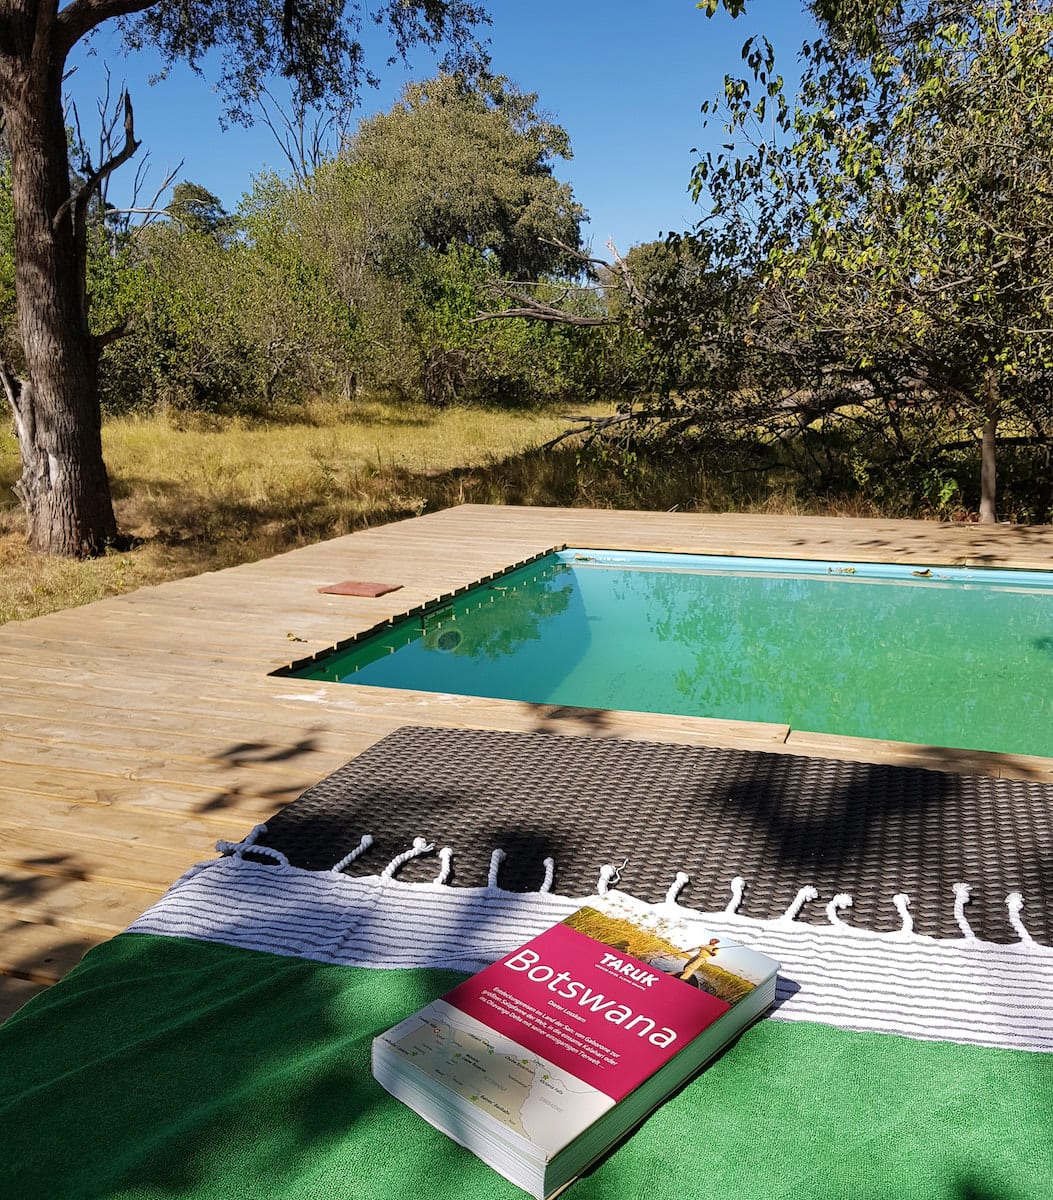 Entspannen am Pool der O Bona Moremi Safari Lodge. Foto: Lena Ziehres, Reiselust-Mag